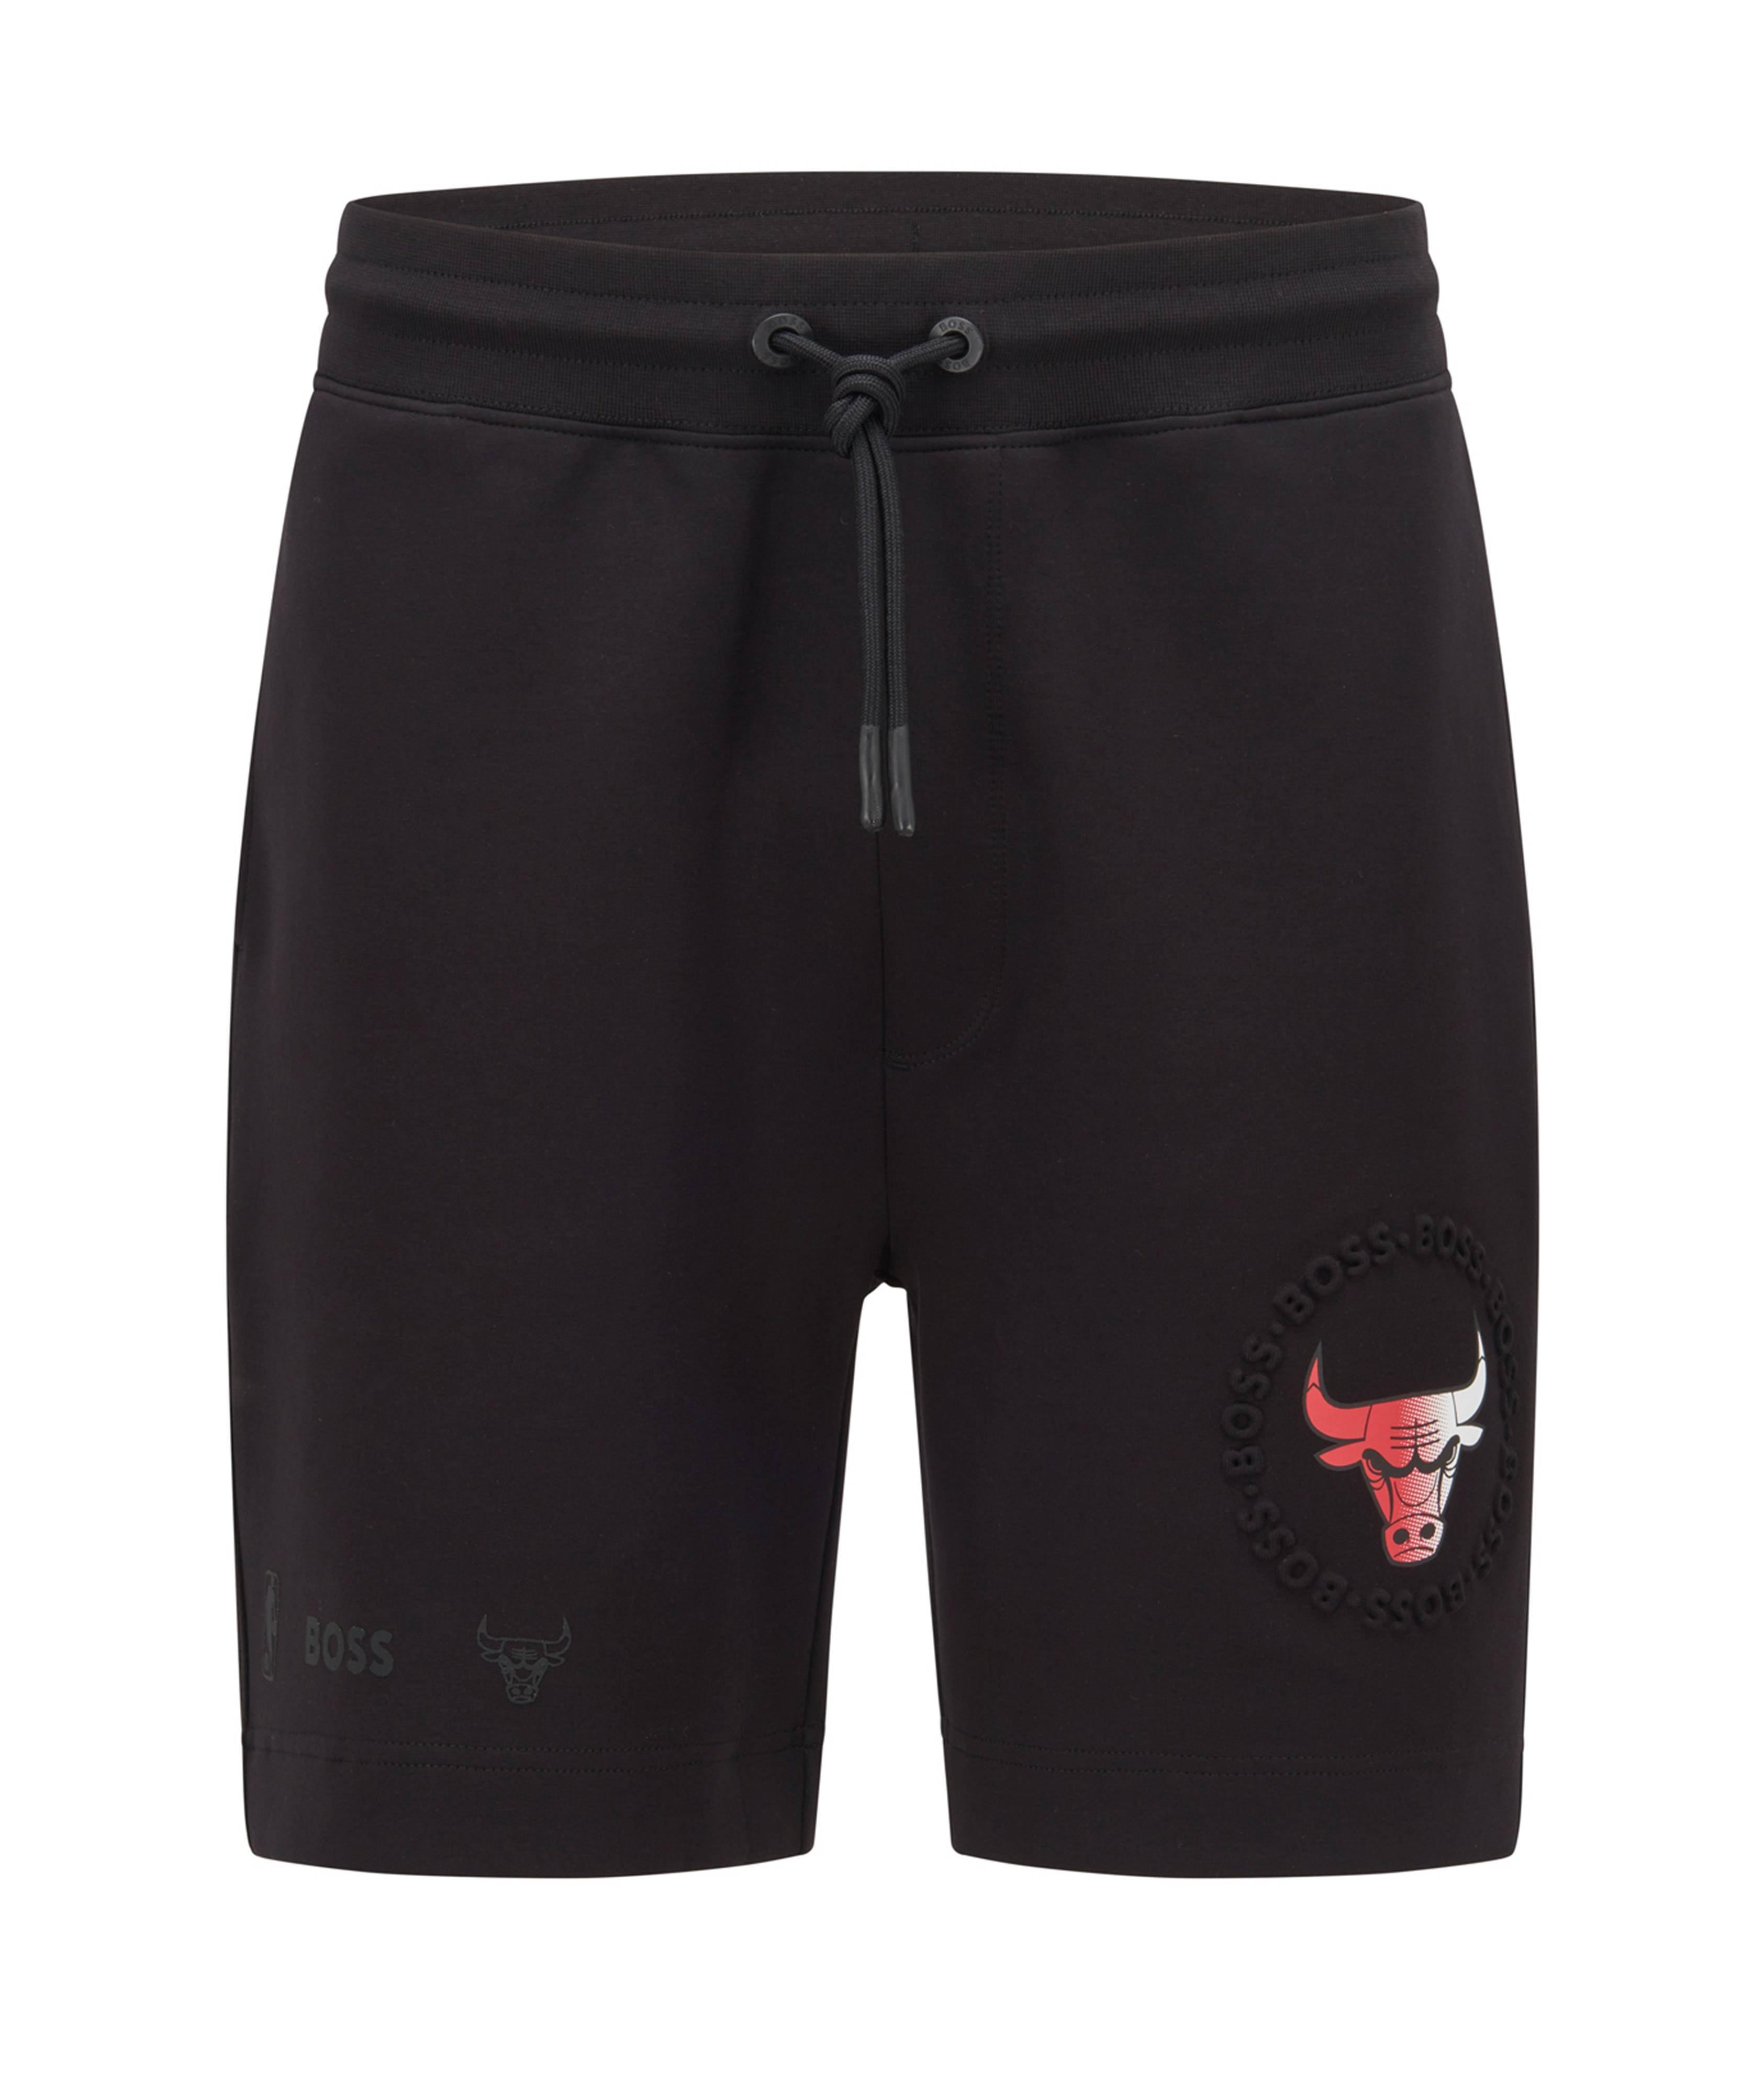 BOSS x NBA Bulls Logo Shorts image 0